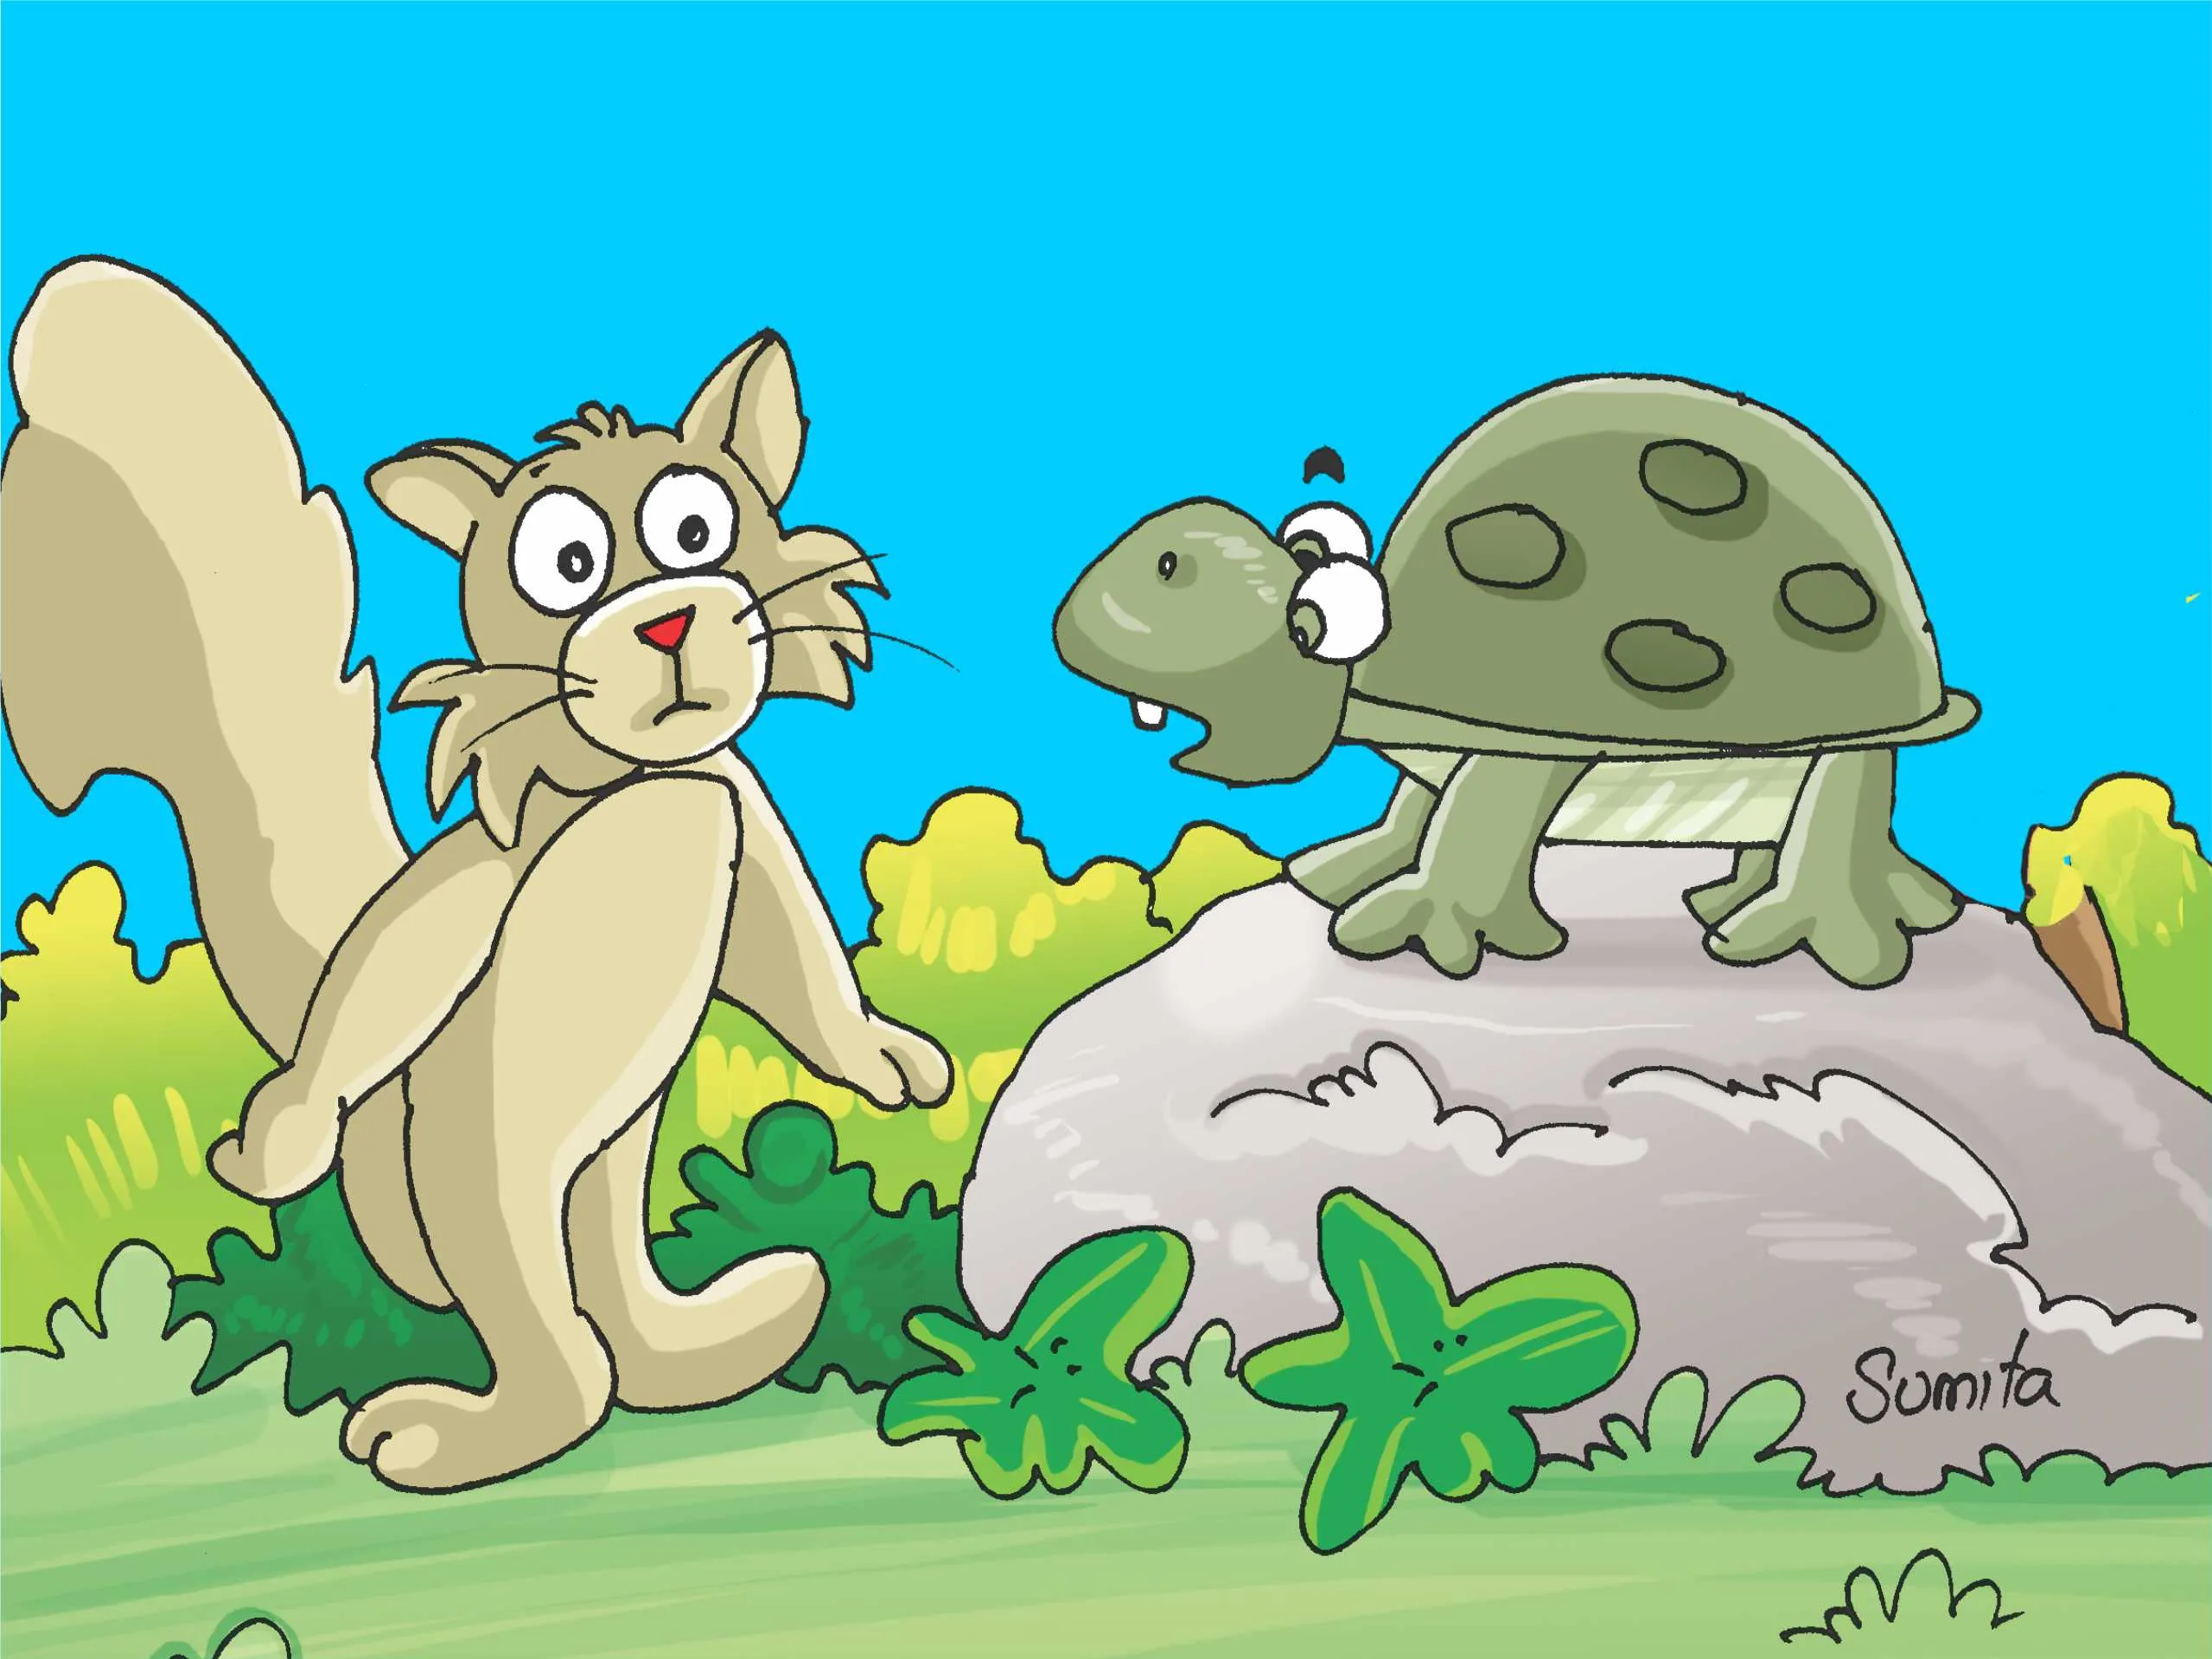 Squirrel and turtle cartoon image